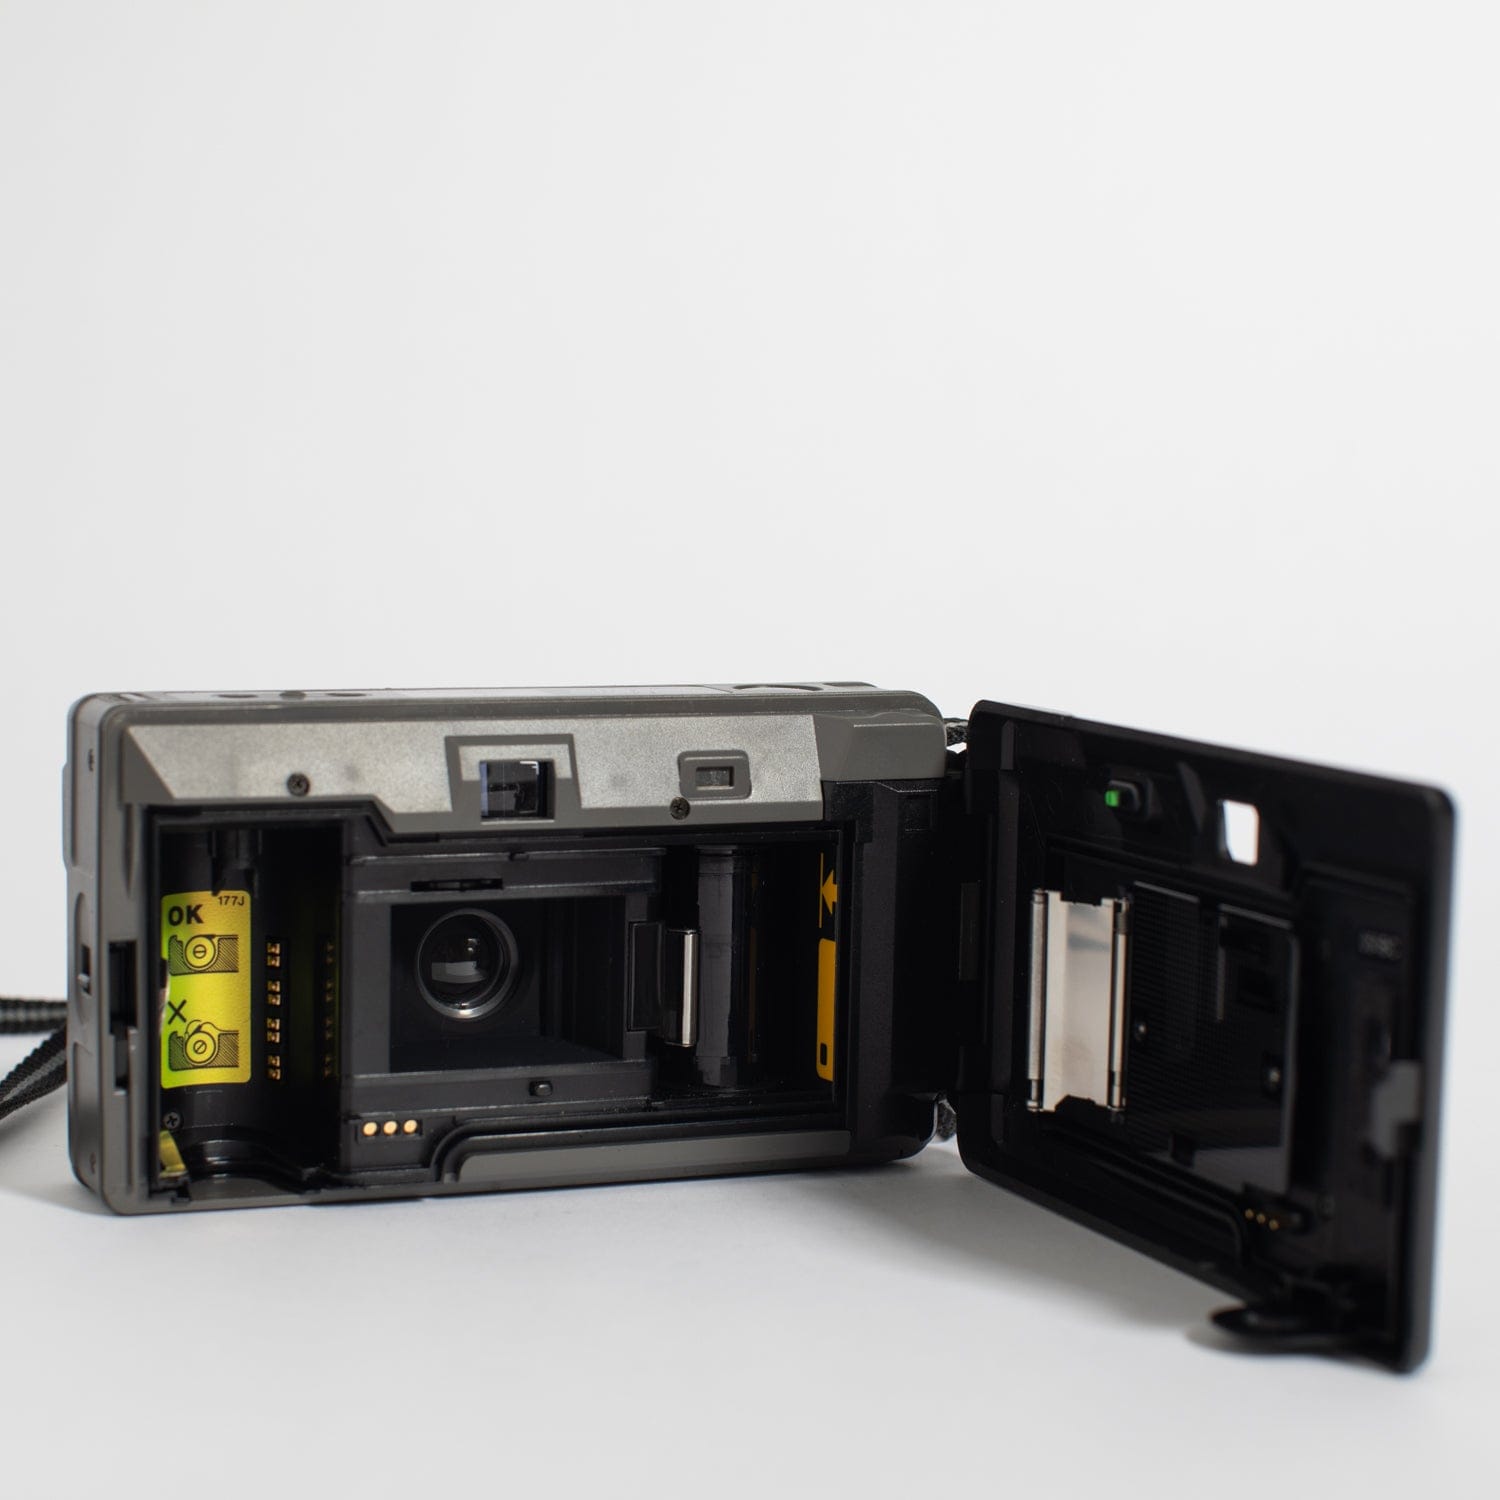 Chinon Auto 3001 Point and Shoot Camera – Film Supply Club